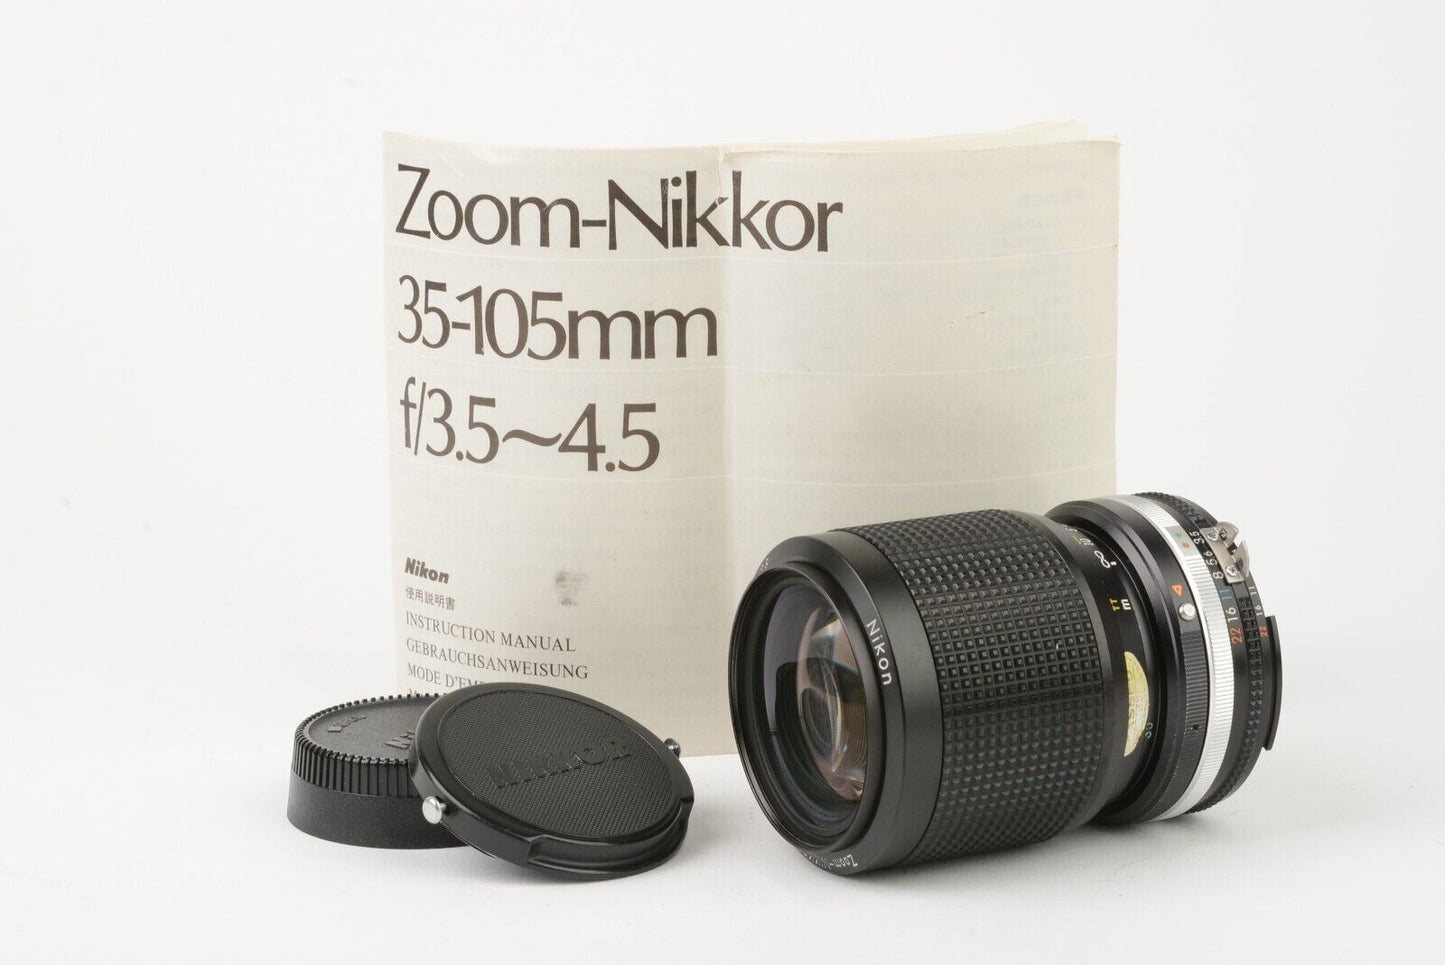 MINT- NIKON ZOOM NIKKOR 35-105mm f3.5-4.5 AI-S COMPACT ZOOM LENS, CAPS, INSTR.